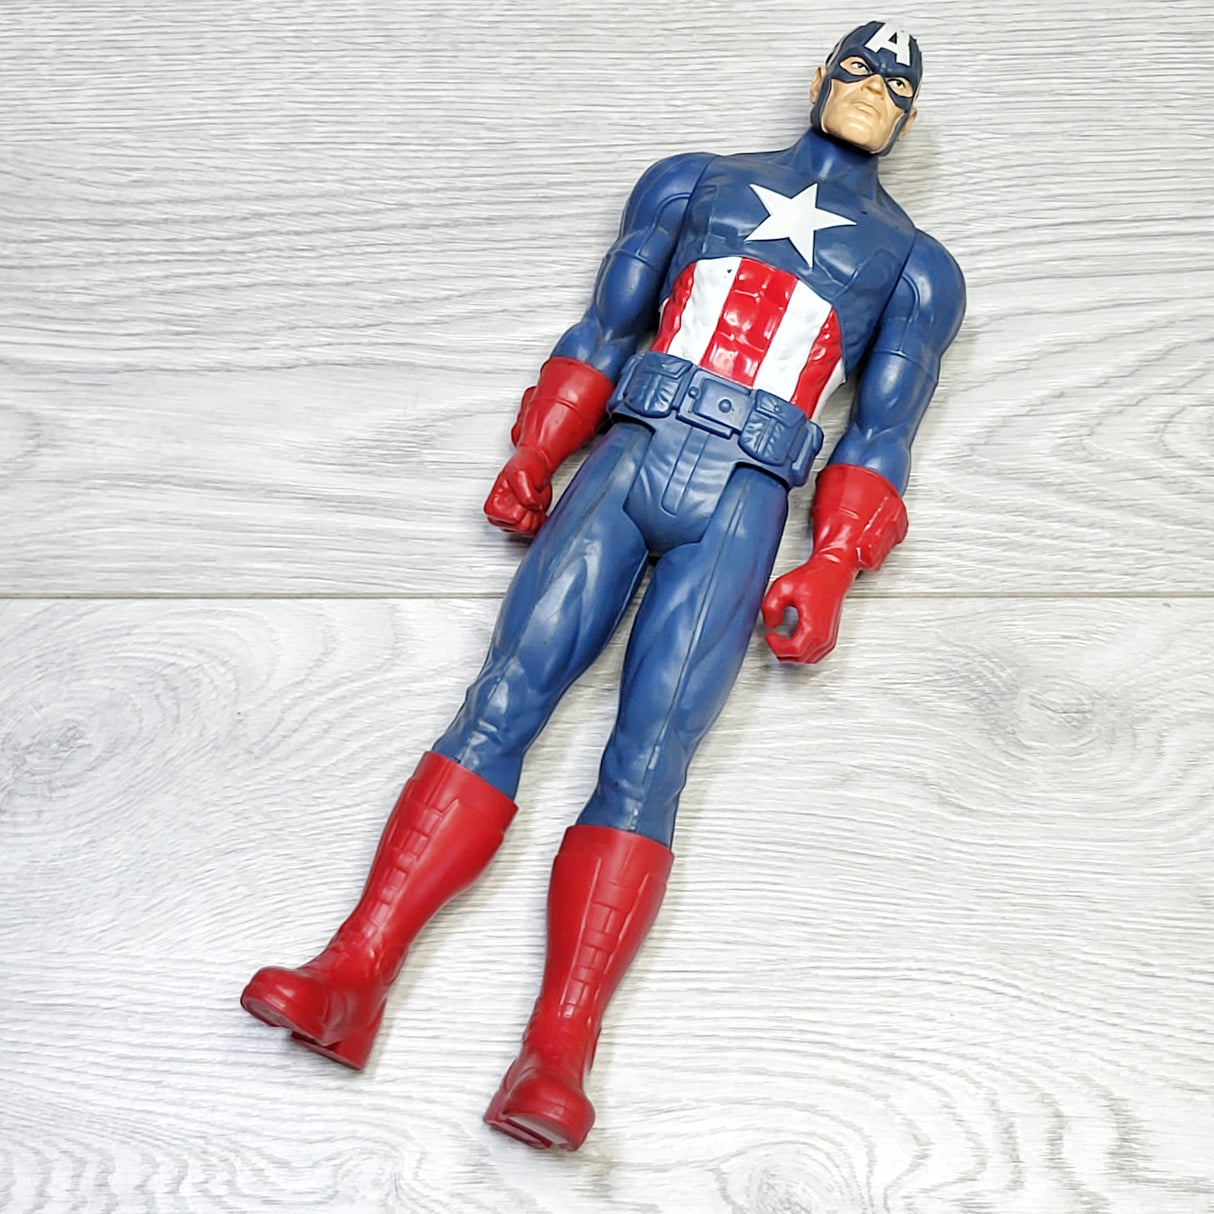 SPLT3 - Captain America action figure